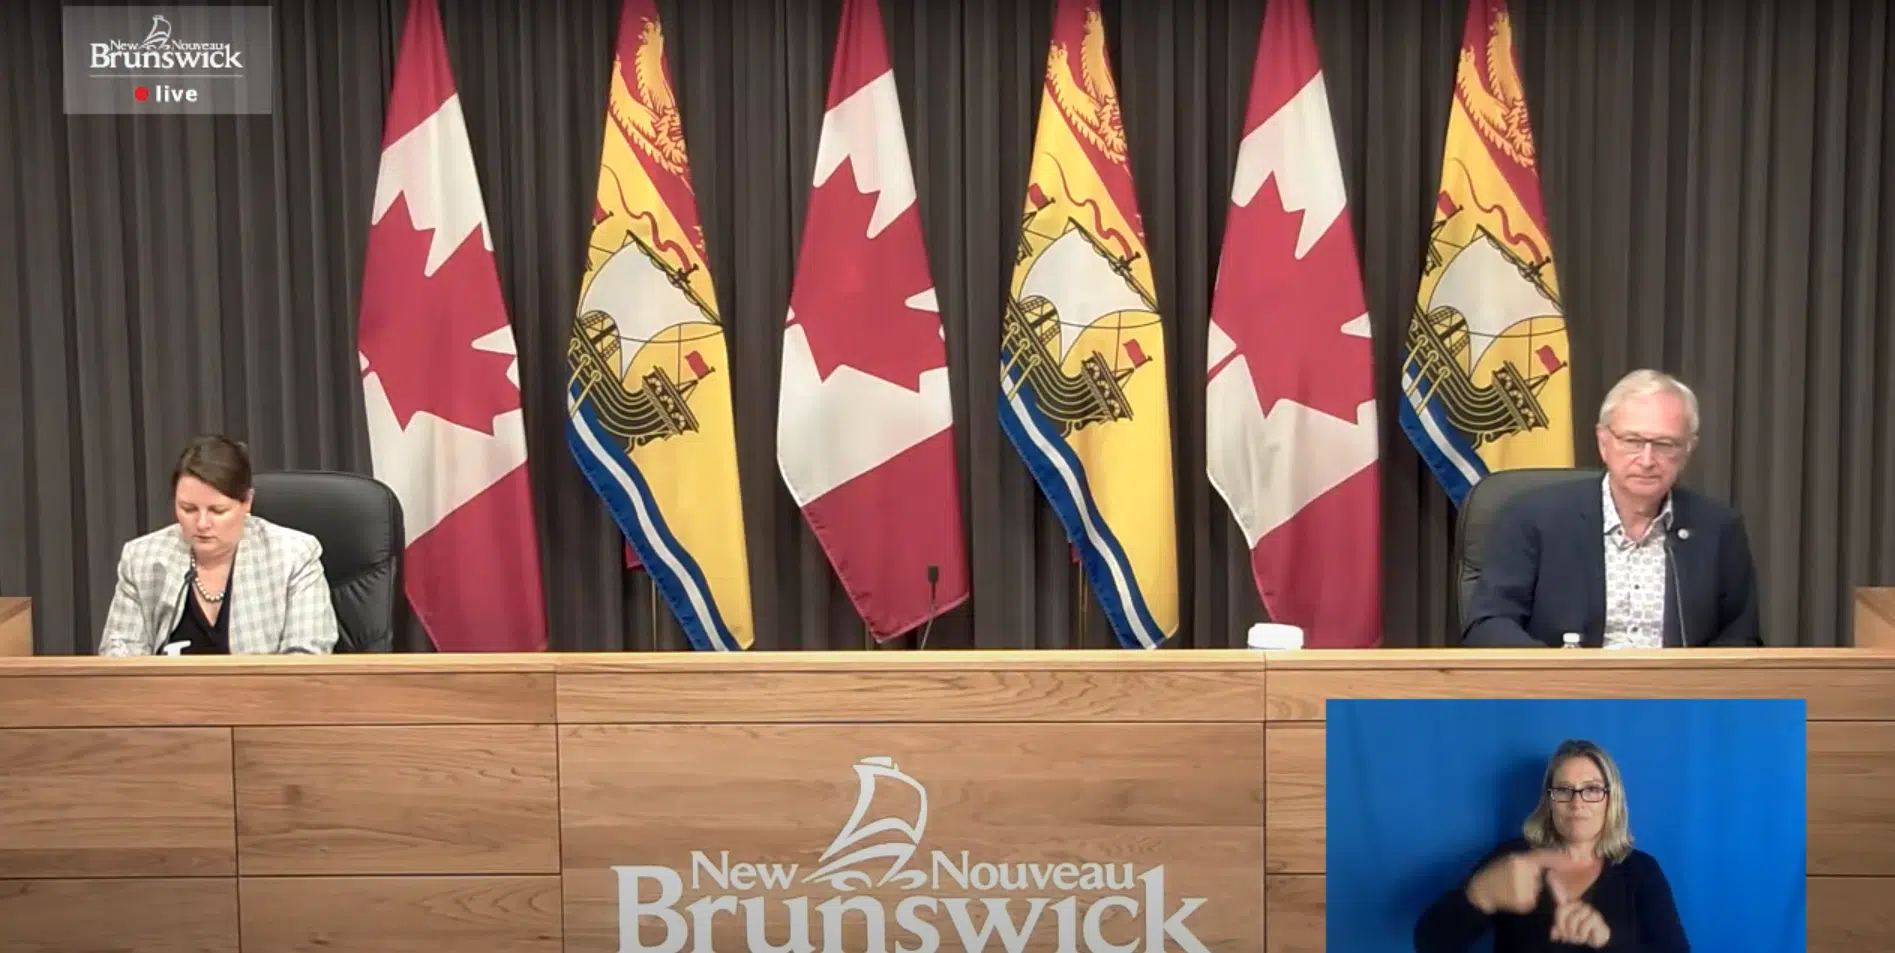 UPDATED: New Brunswick Brings Back Mask Mandate